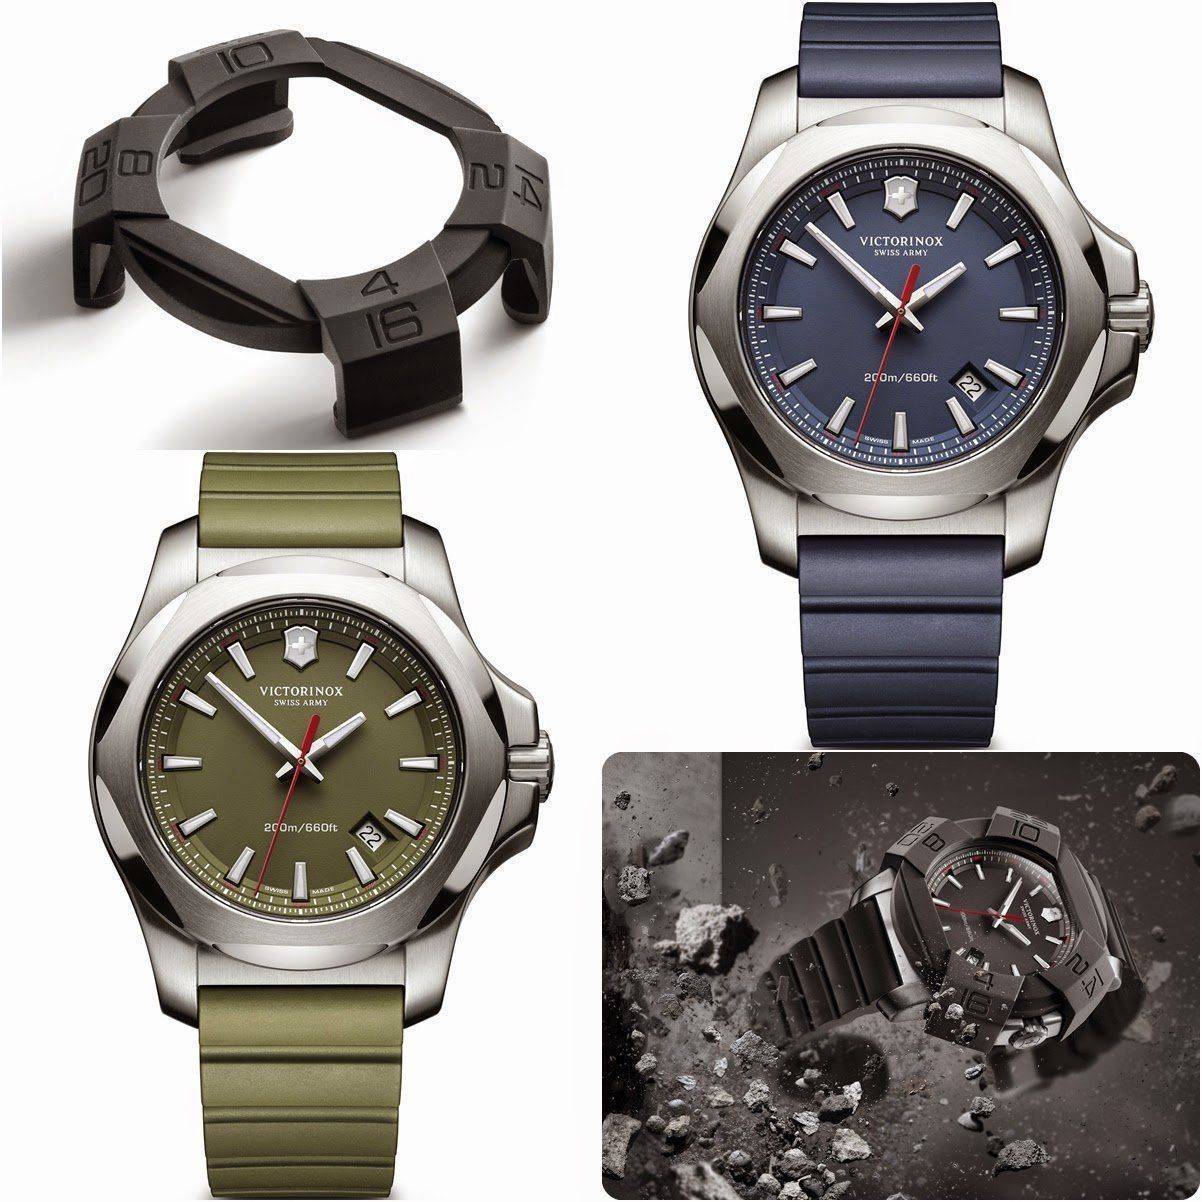 inox-victorinox-swiss-army-watch-launch.jpg